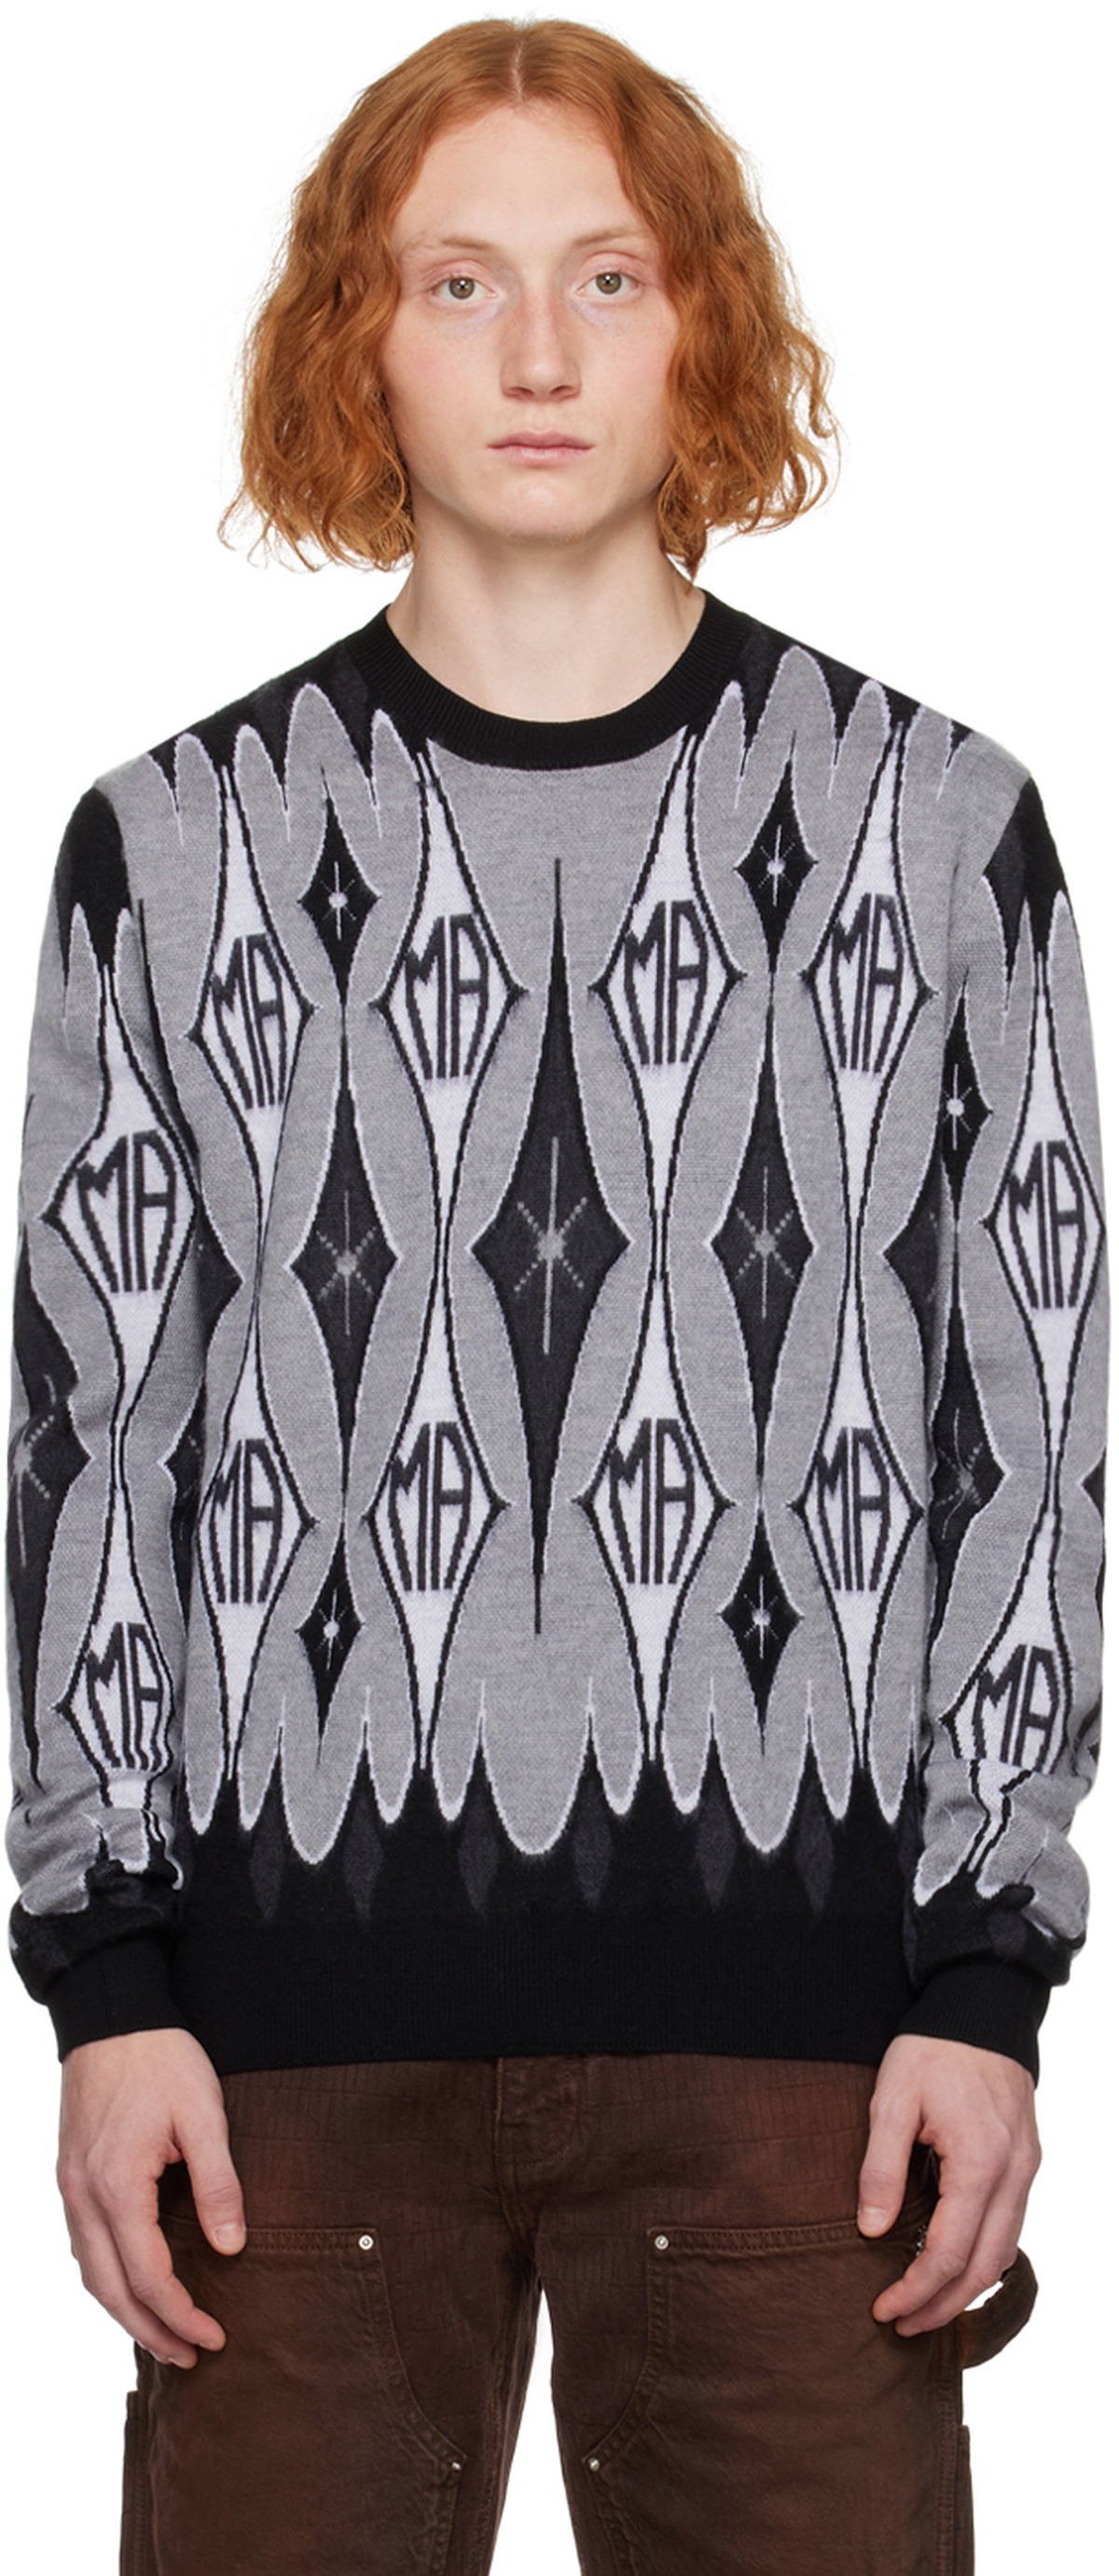 Louis Vuitton Mens Monogram Jacquard Knit Crew Neck Sweatshirt Navy White Small